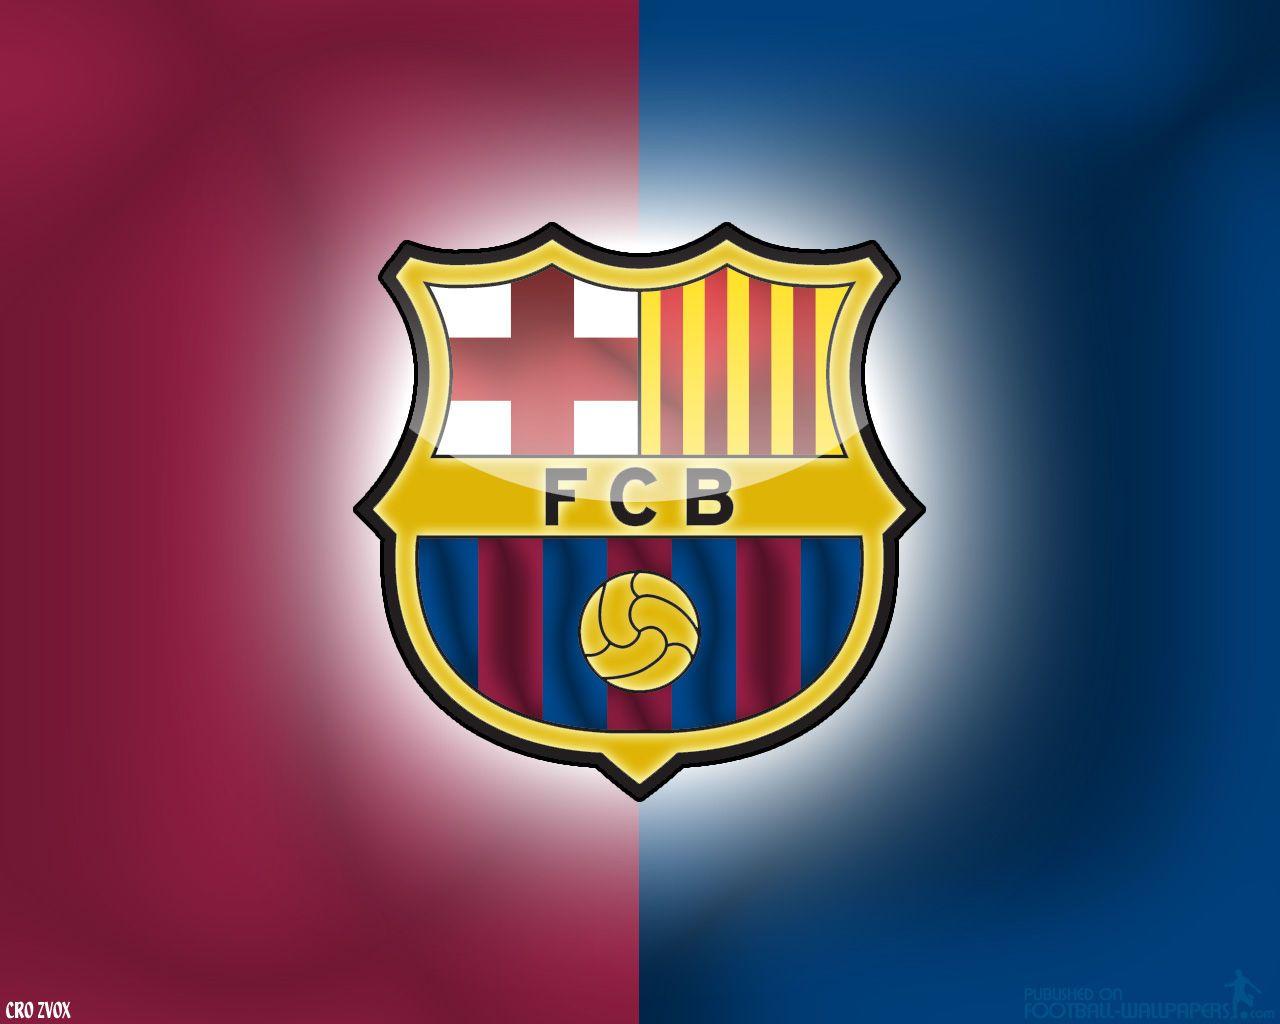 Barcelona Badge Wallpaper: Players, Teams, Leagues